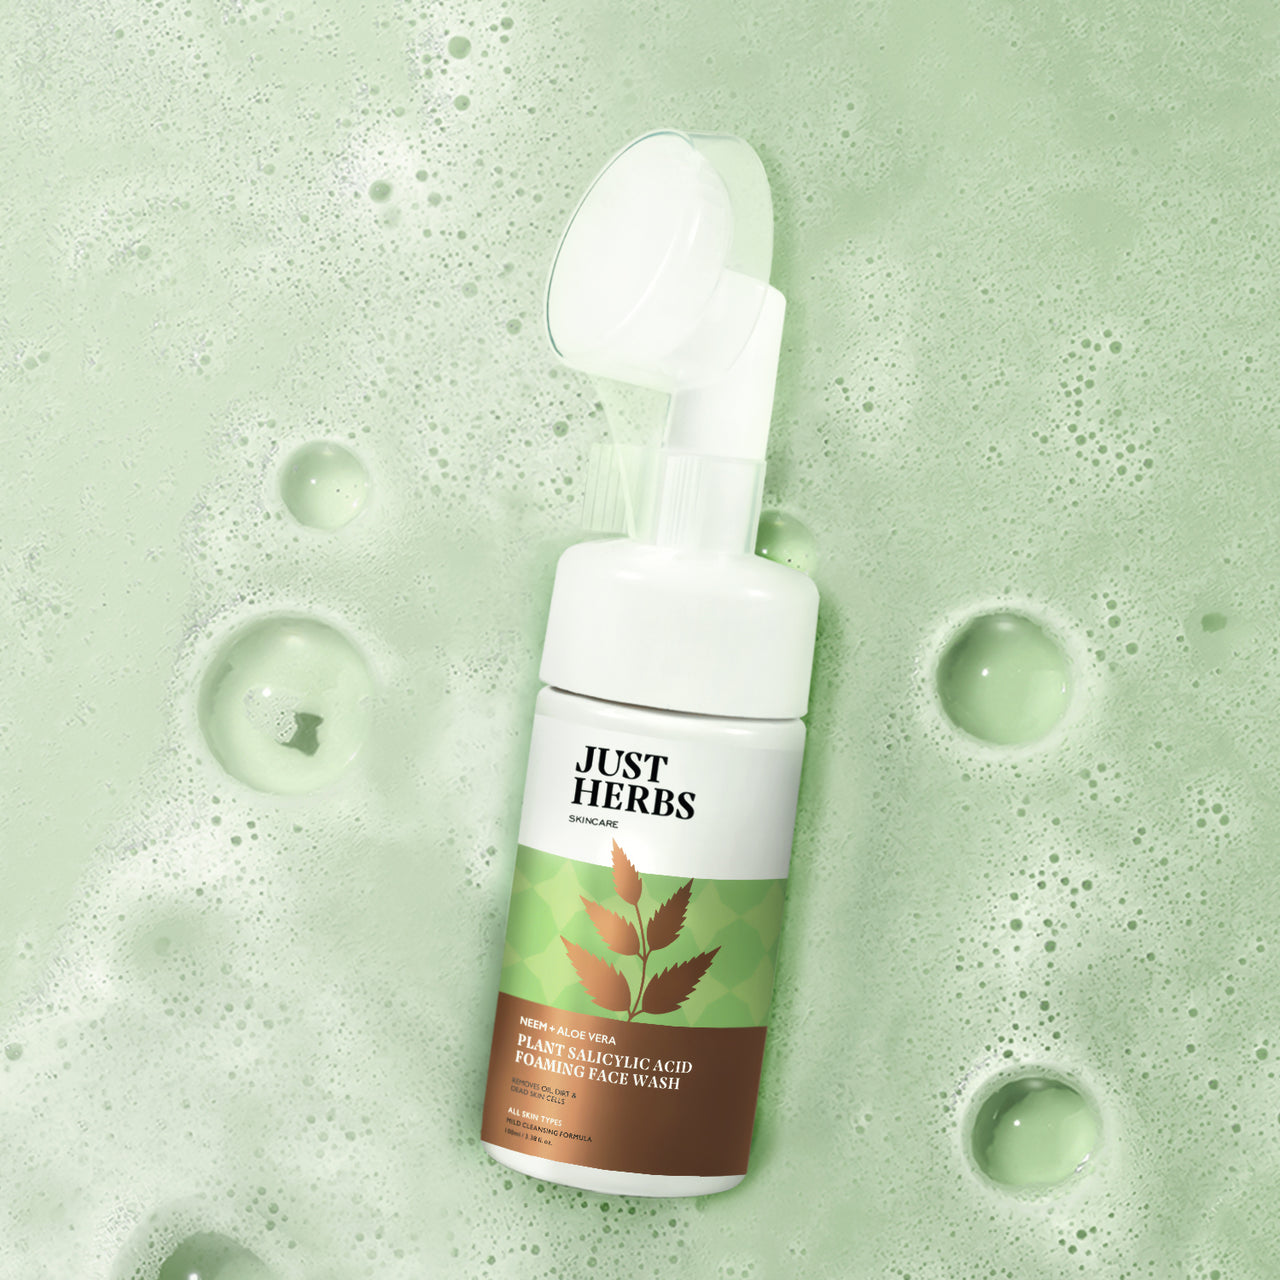 Plant Salicylic Acid Foaming Face Wash with Neem & Aloe Vera